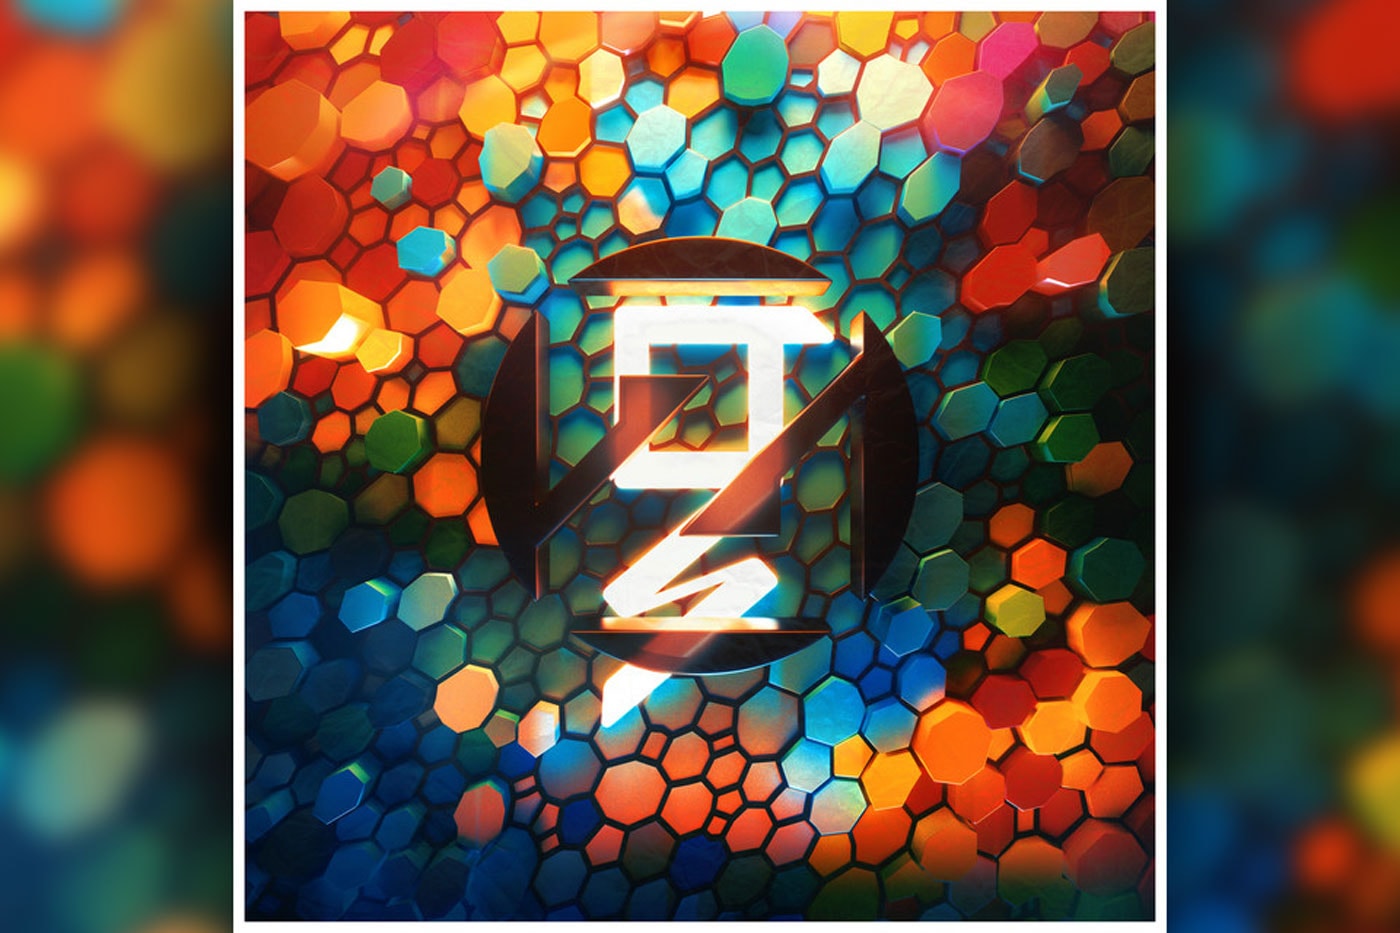 Zedd & Grey Share New Track "Adrenaline"